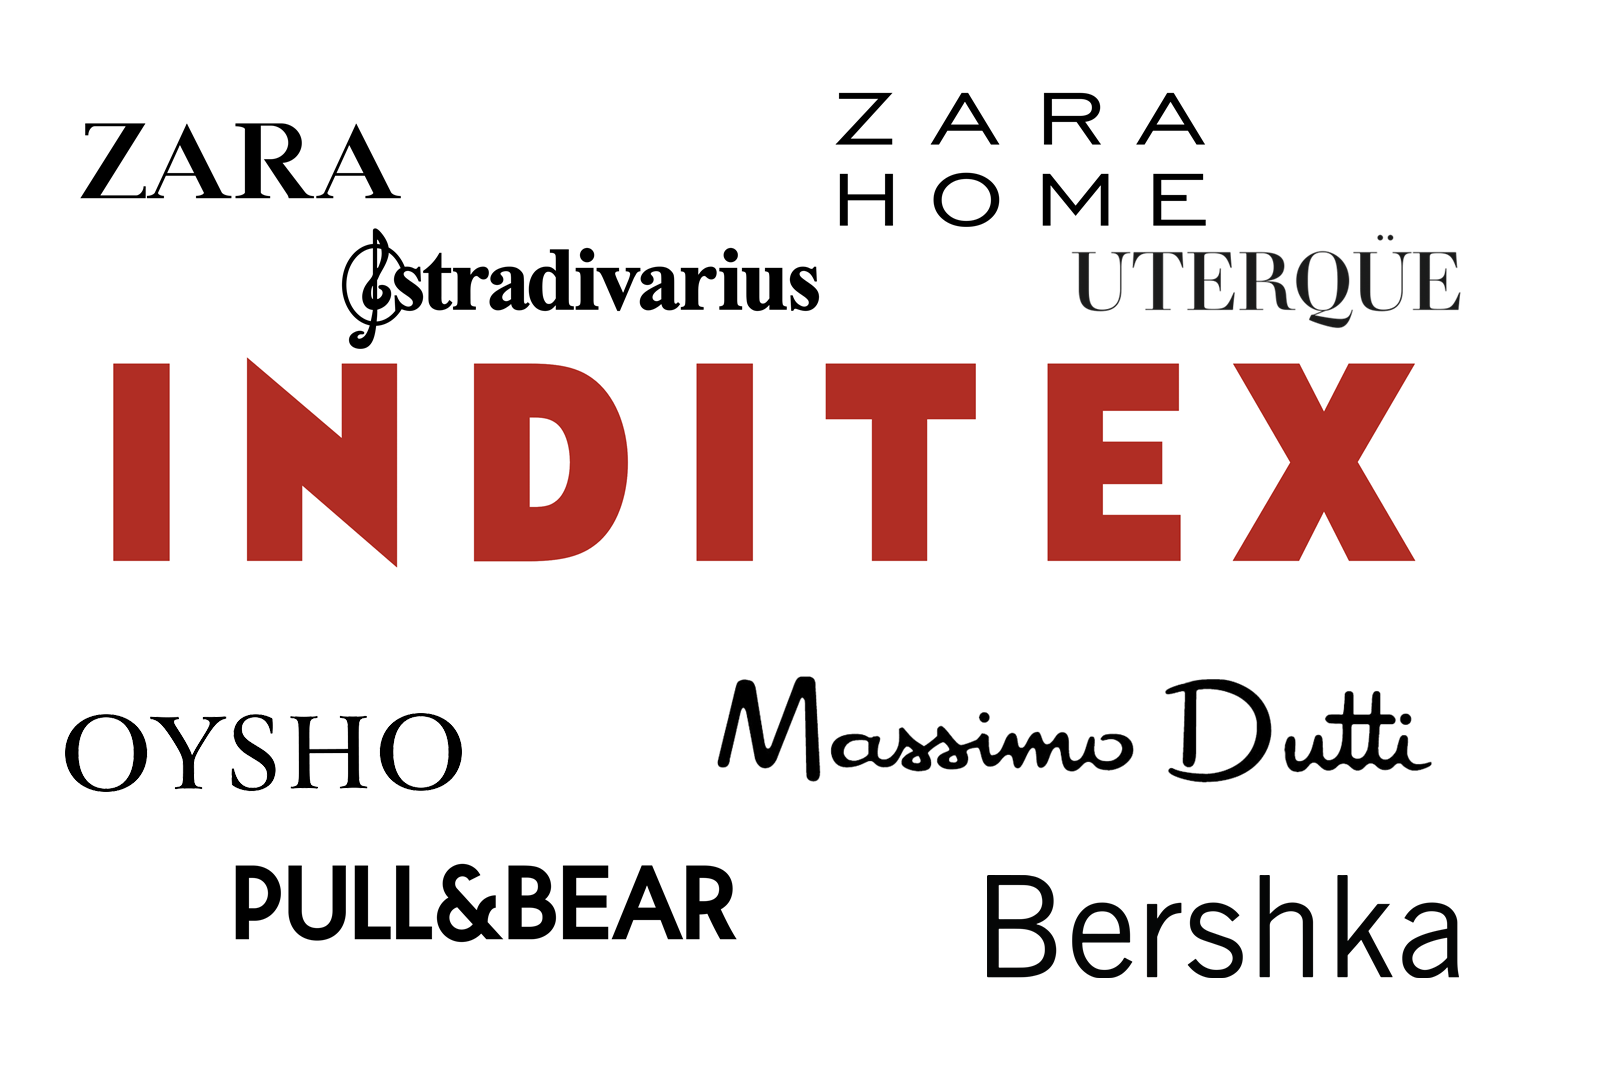 inditex group zara